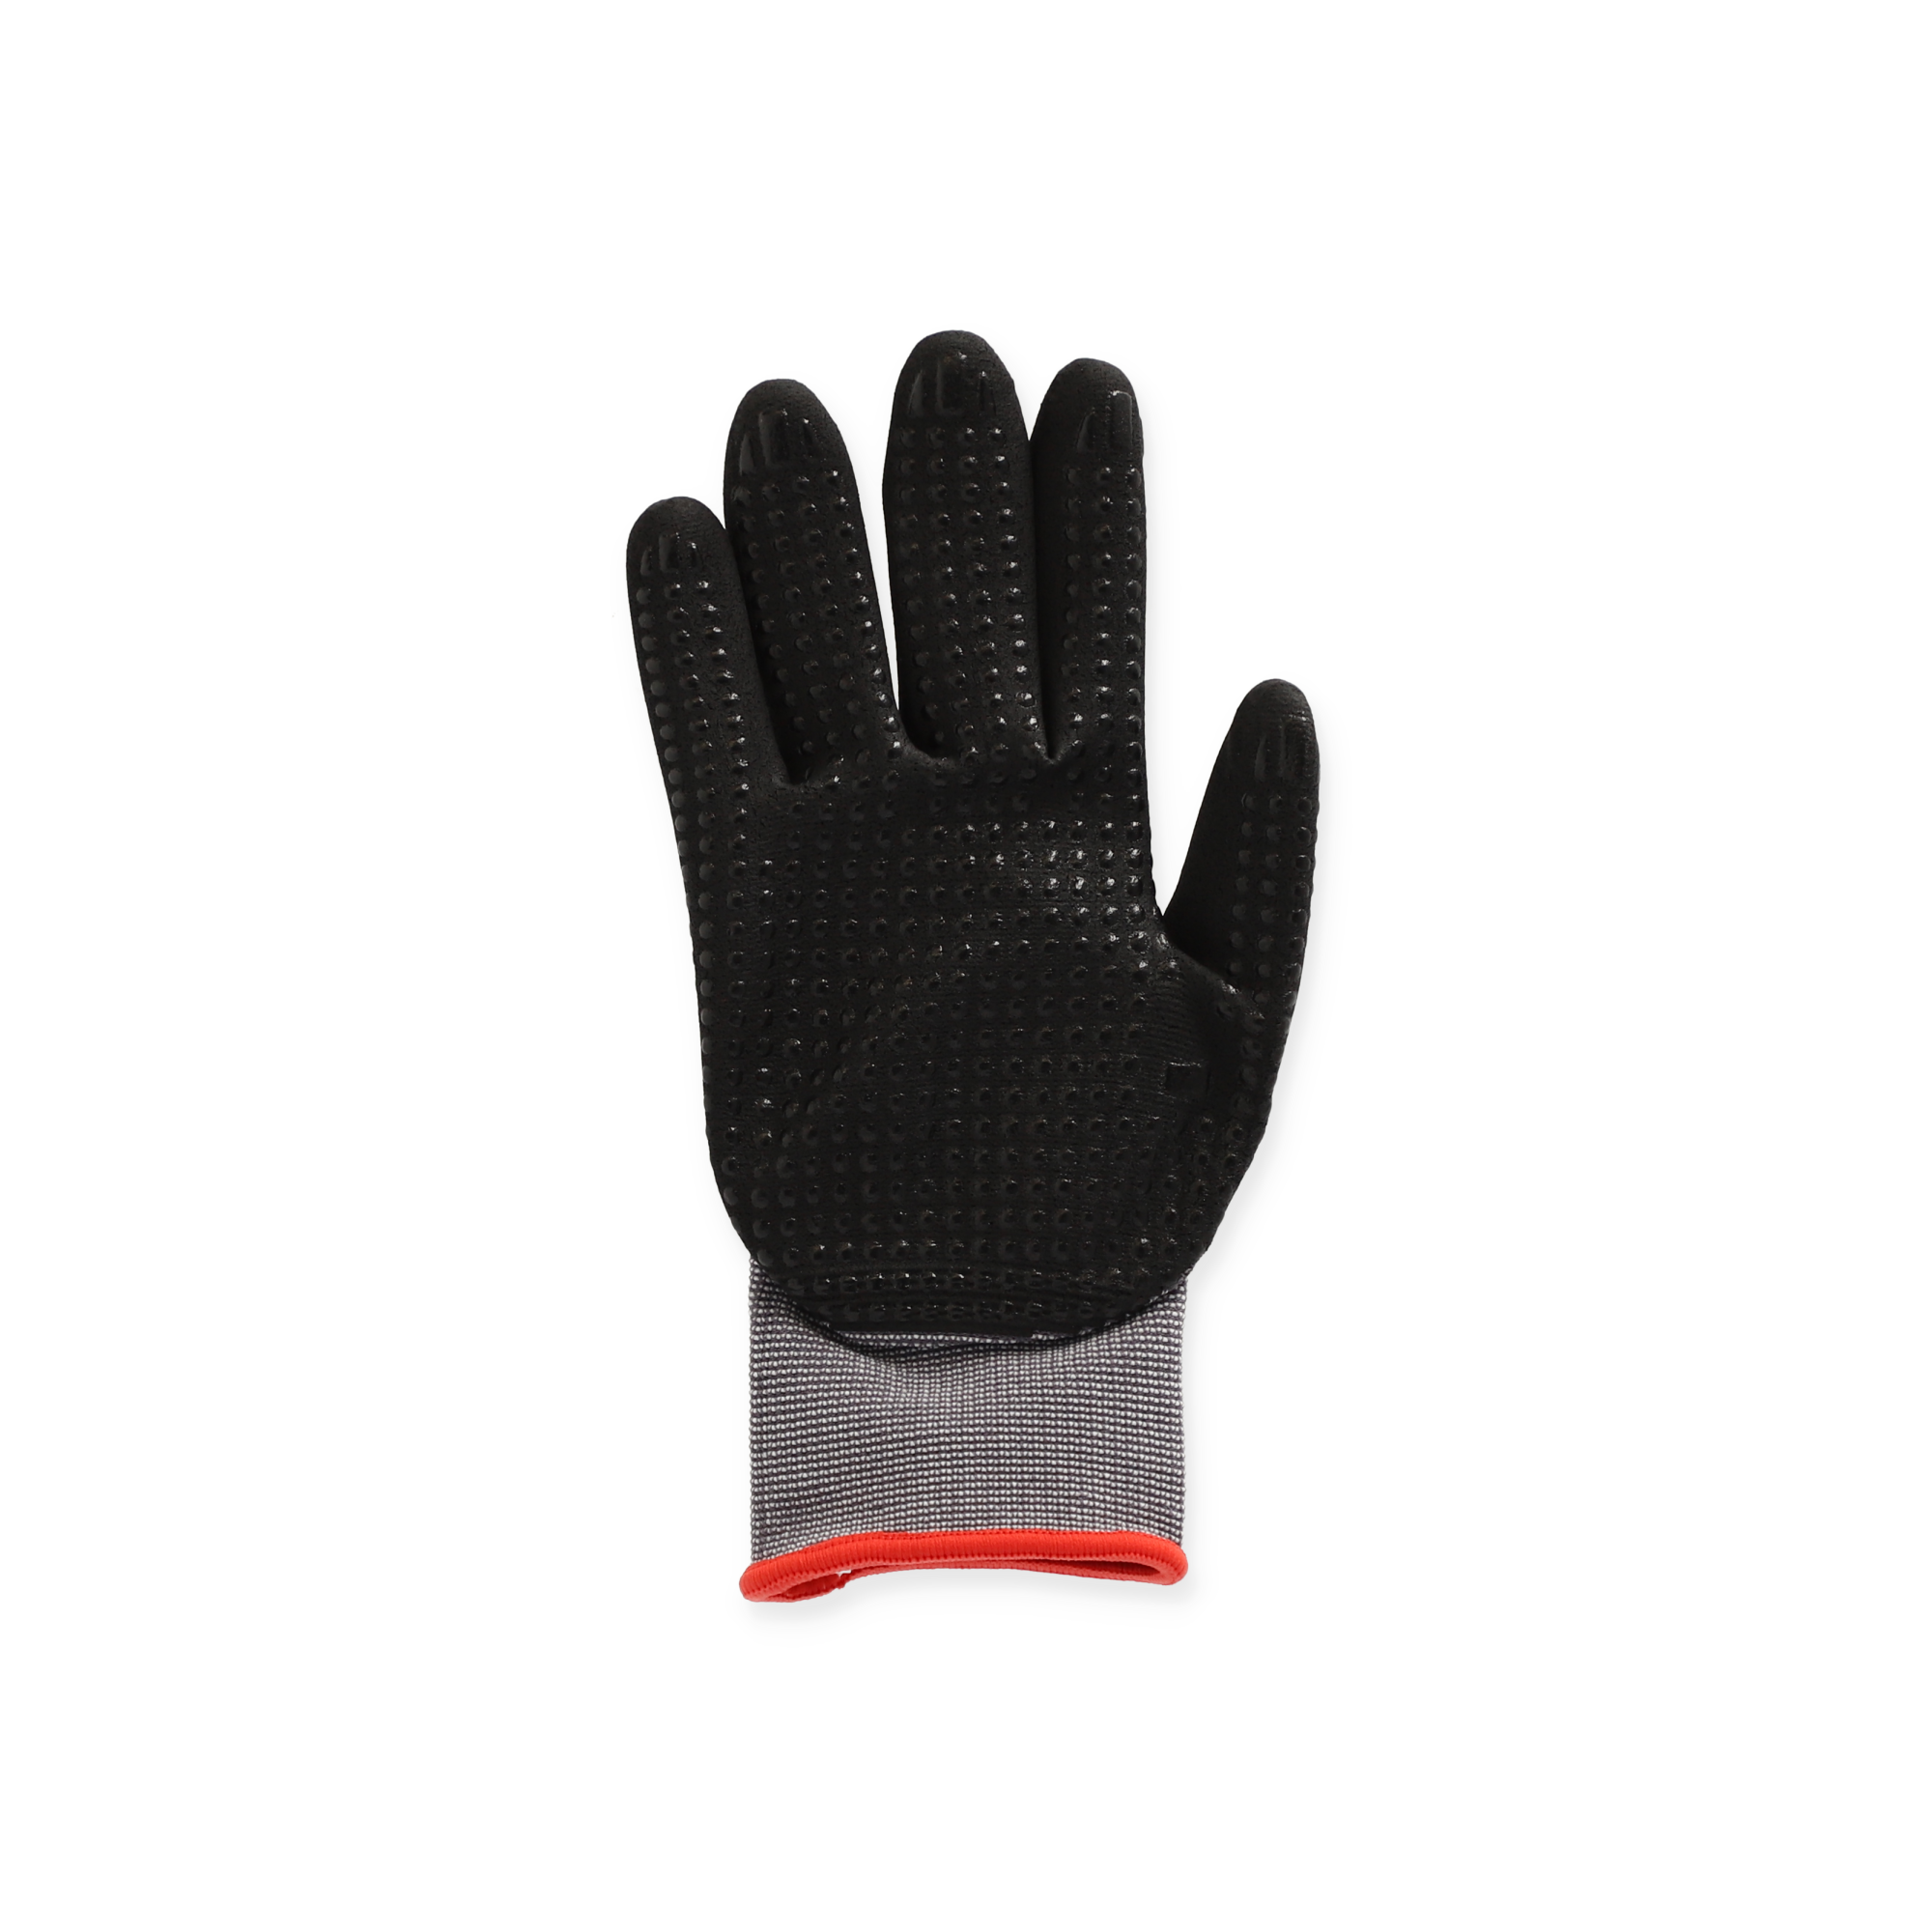 Handschuhe 'Multi Flex' grau Gr. 7 + product picture